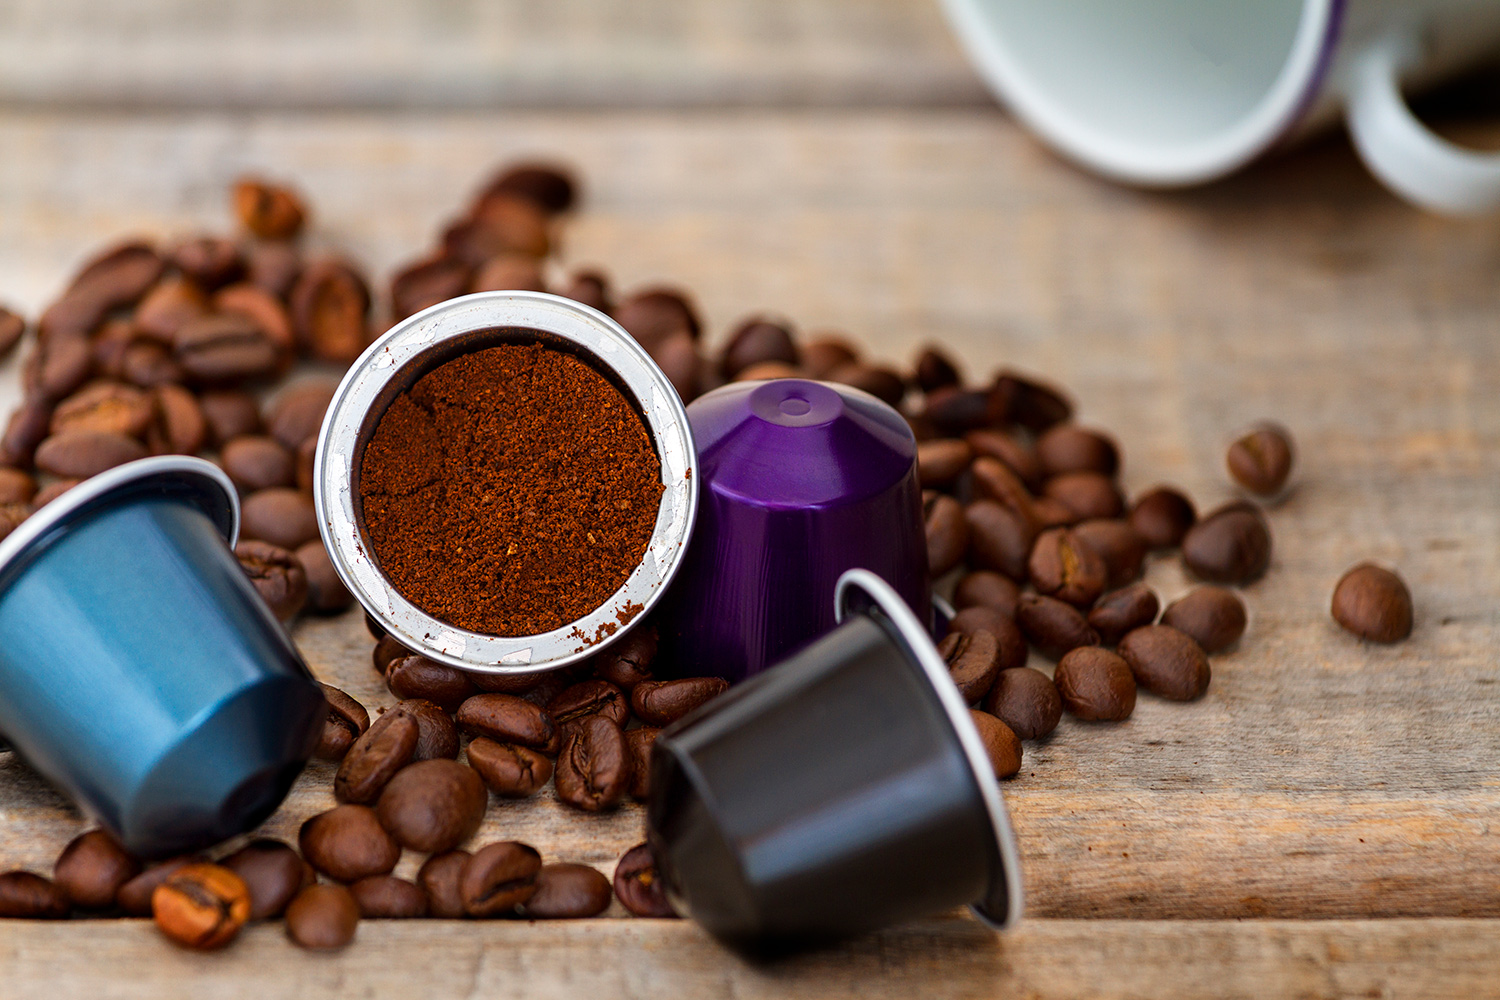 Keurig vs. Nespresso: Which Brand Makes Better Coffee?